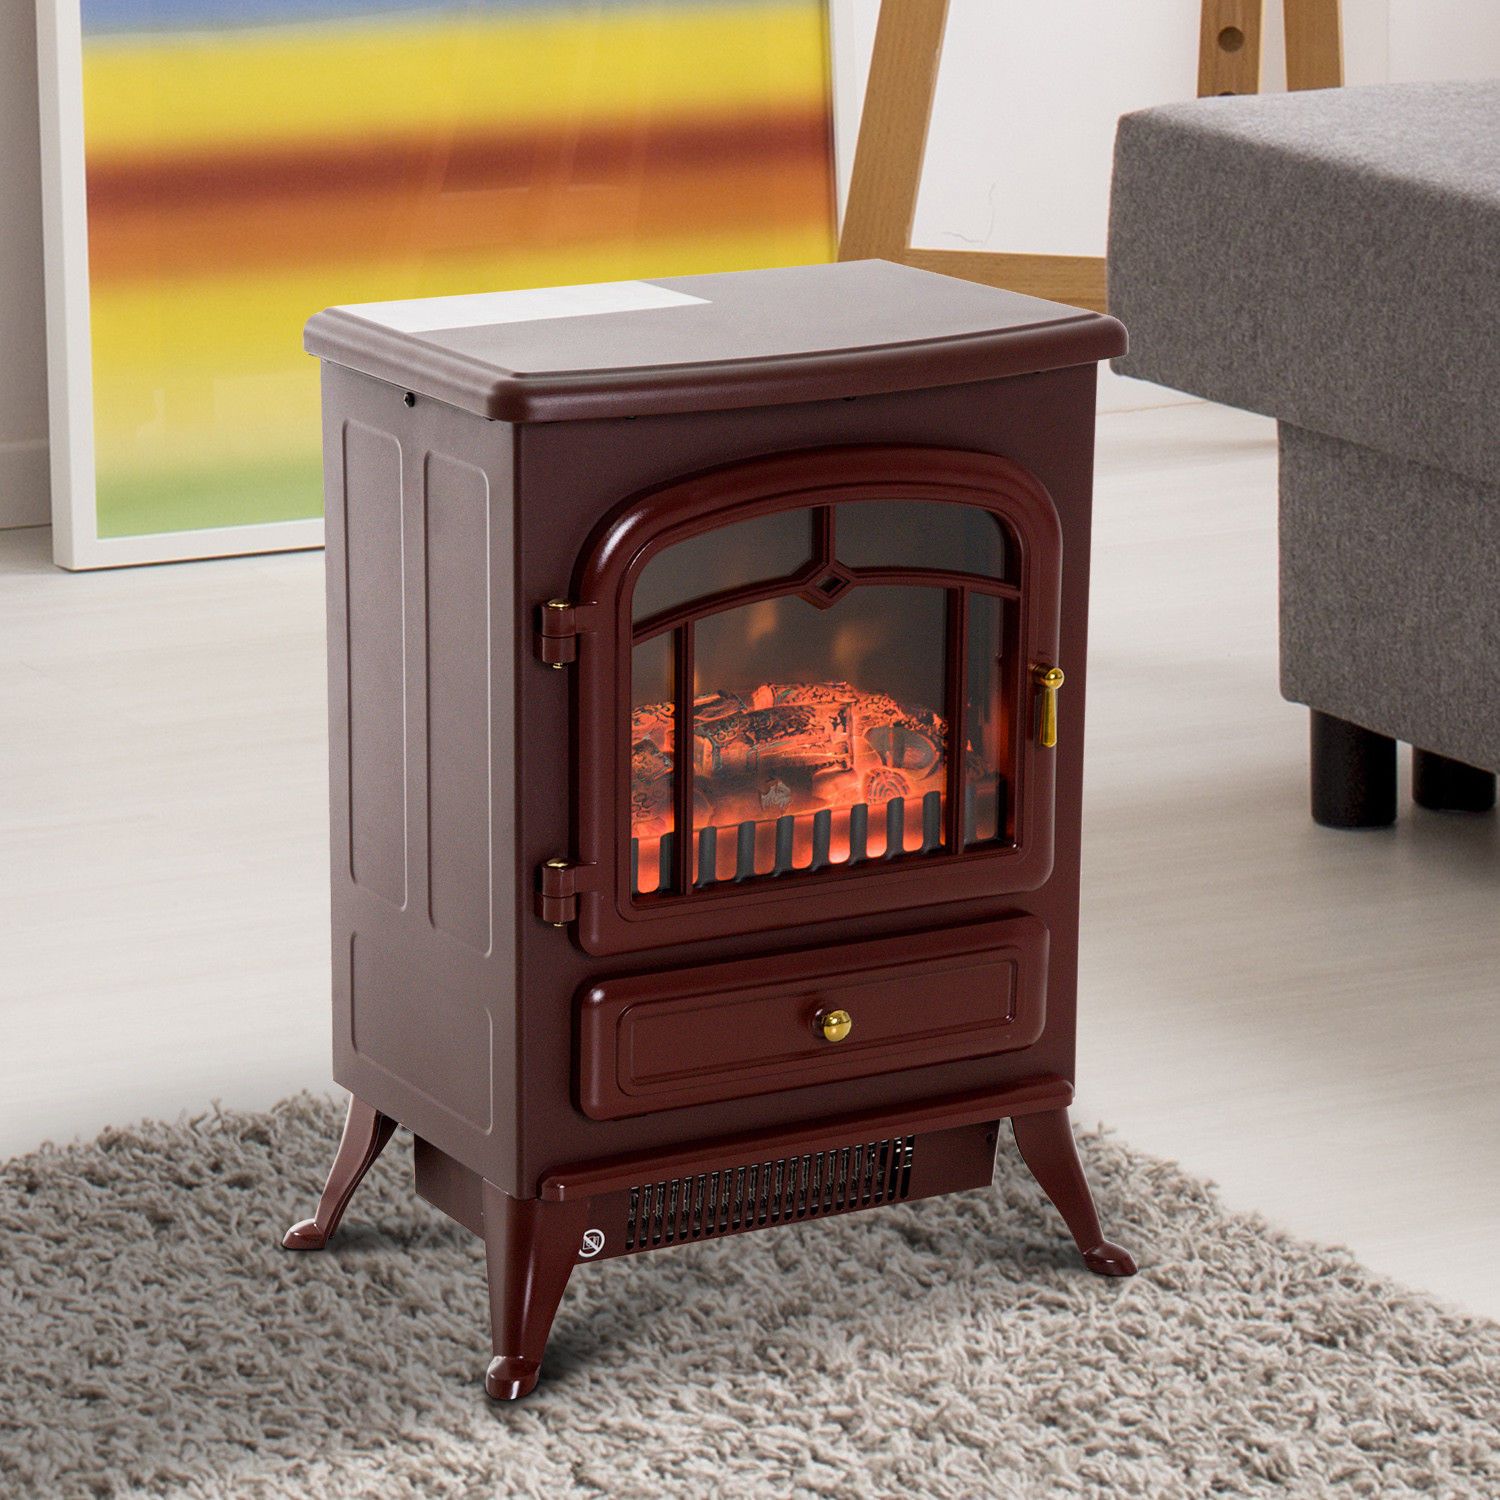 Fireplace Looking Heaters Best Of Hom 16” 1500 Watt Free Standing Electric Wood Stove